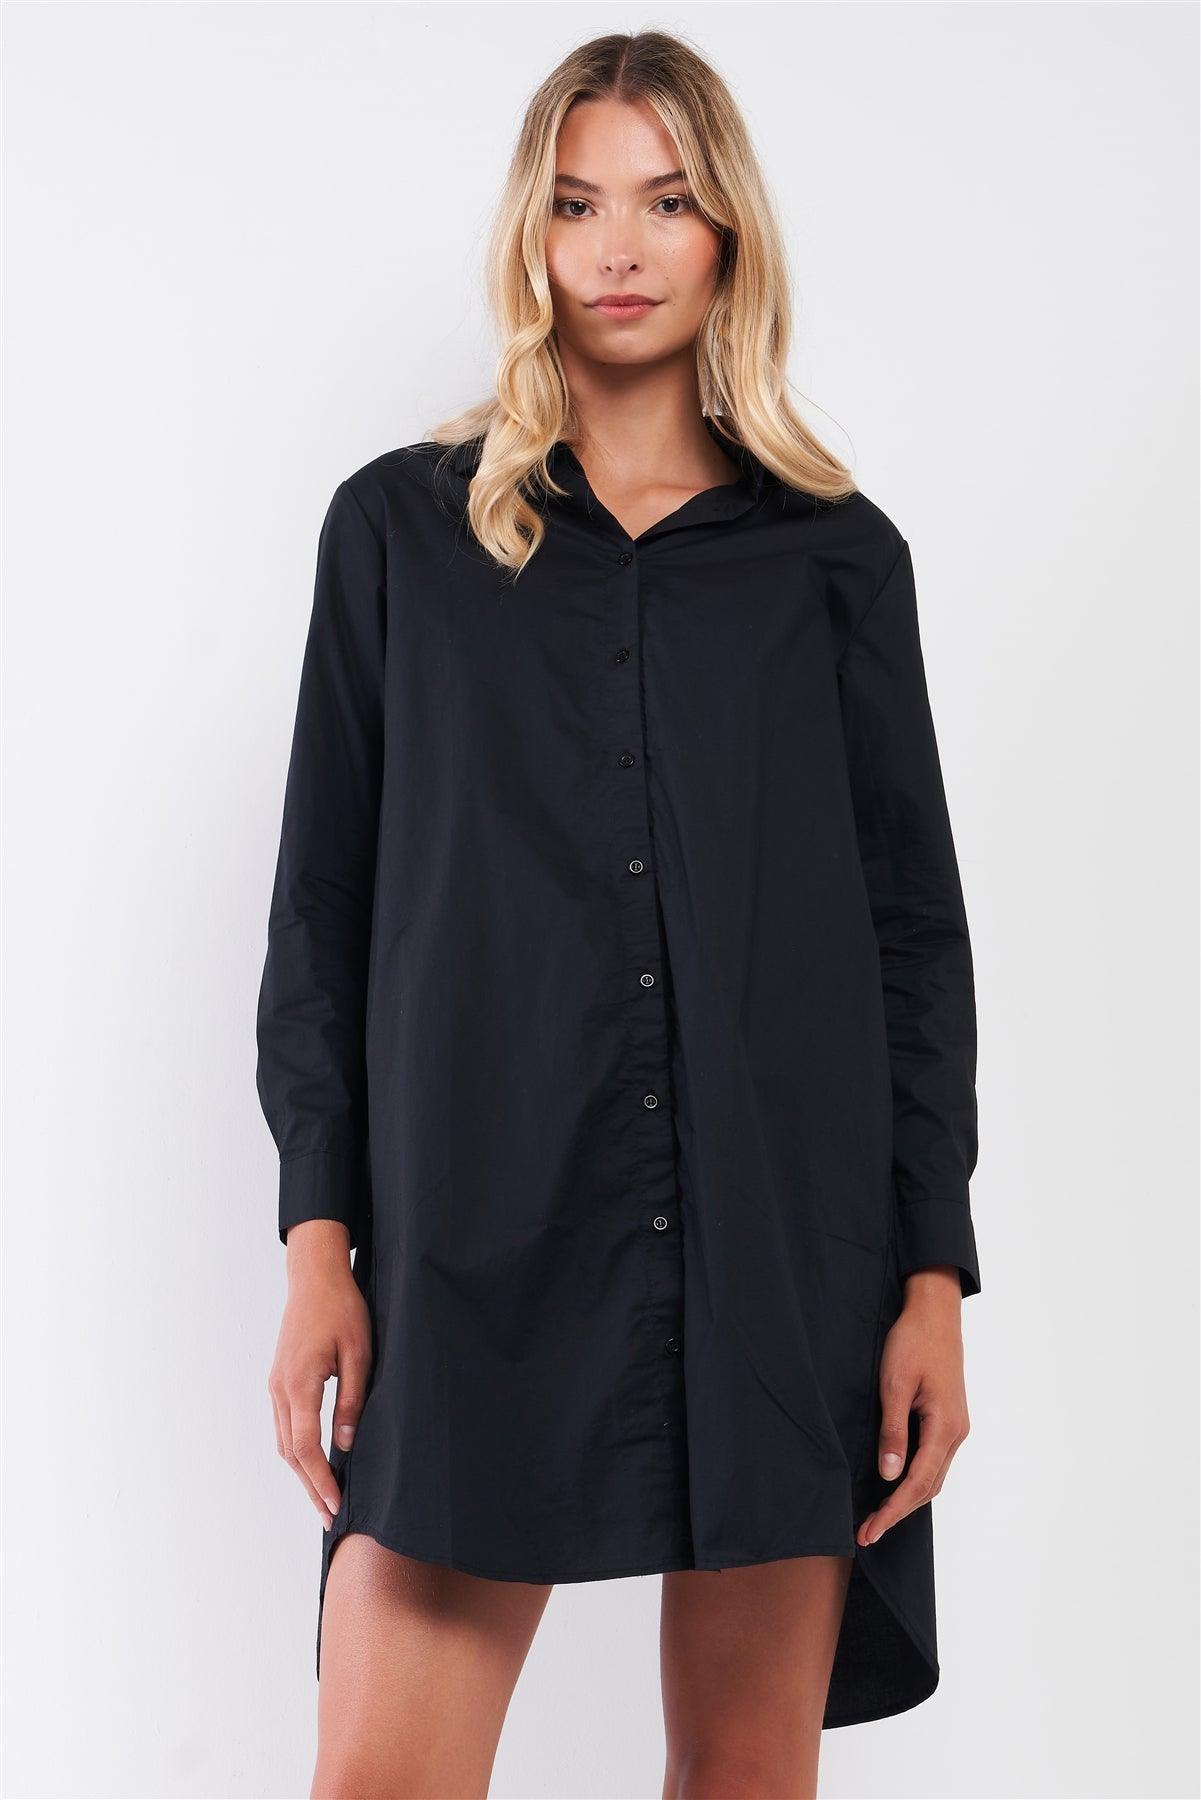 Solid Black Cotton Long Sleeve Front Button Down Back Slit Dress-Shirt Top /1-2-2-1